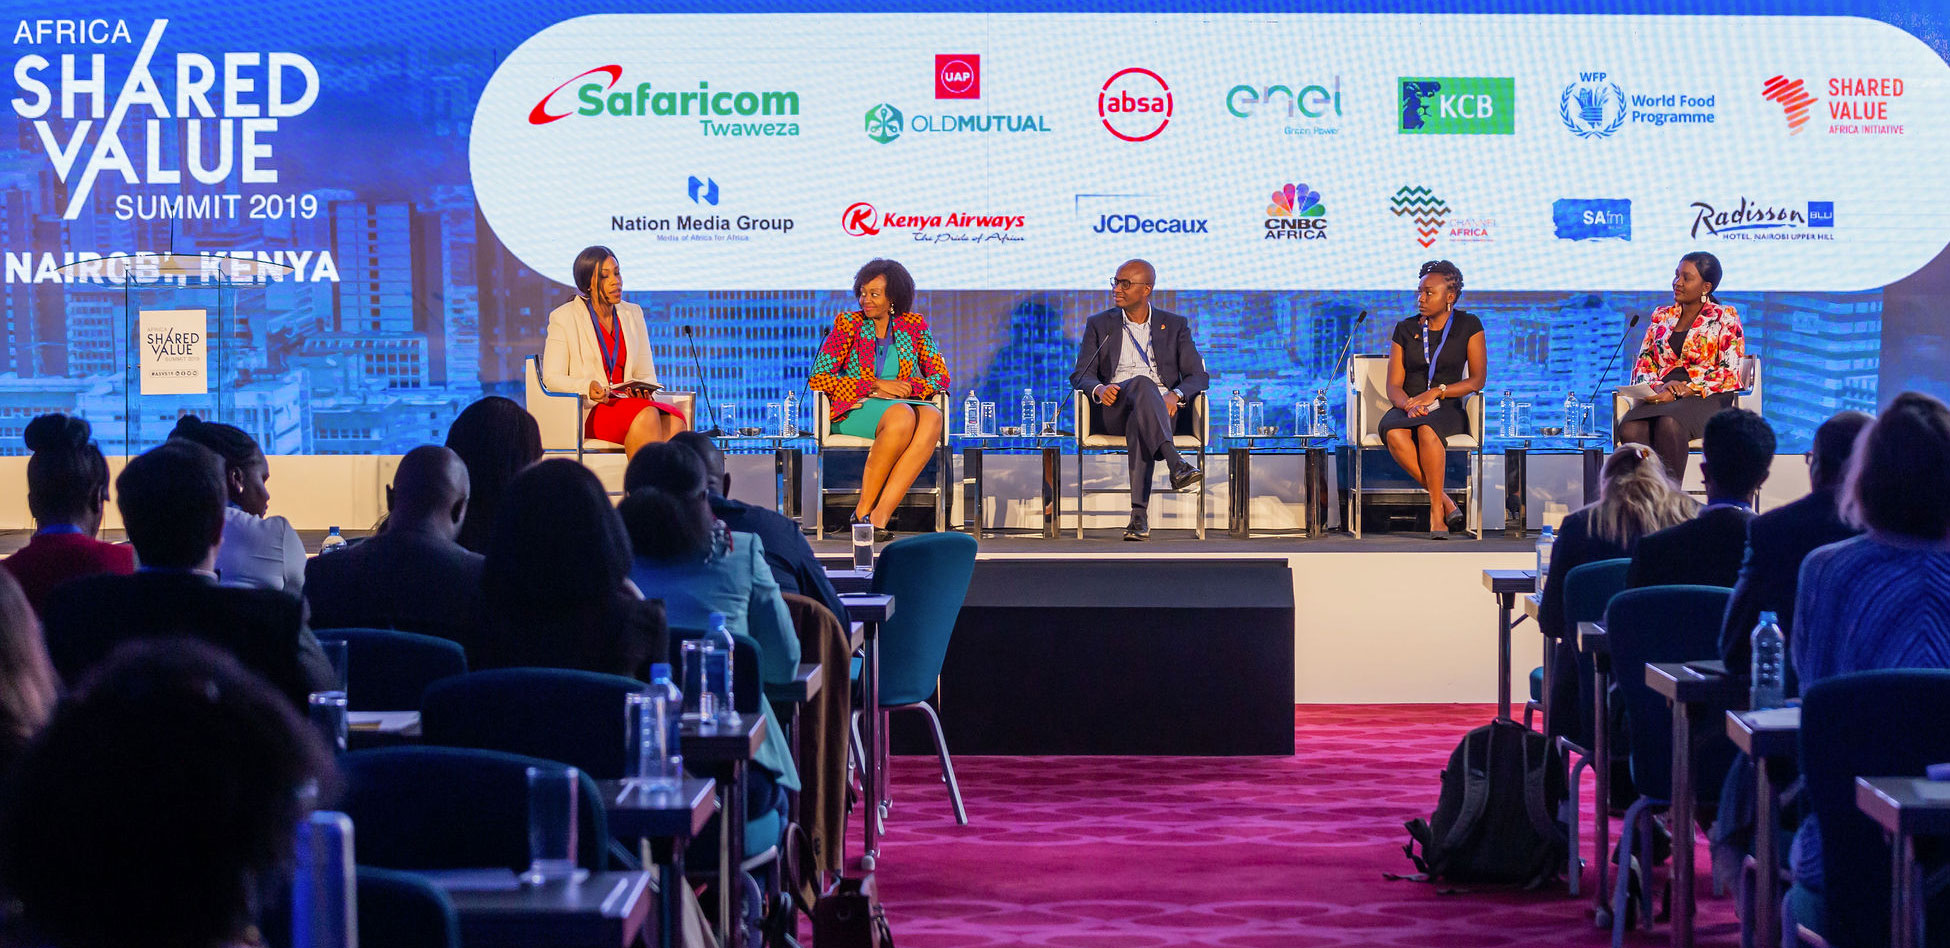 Africa Shared Value Kenya Summit 2019